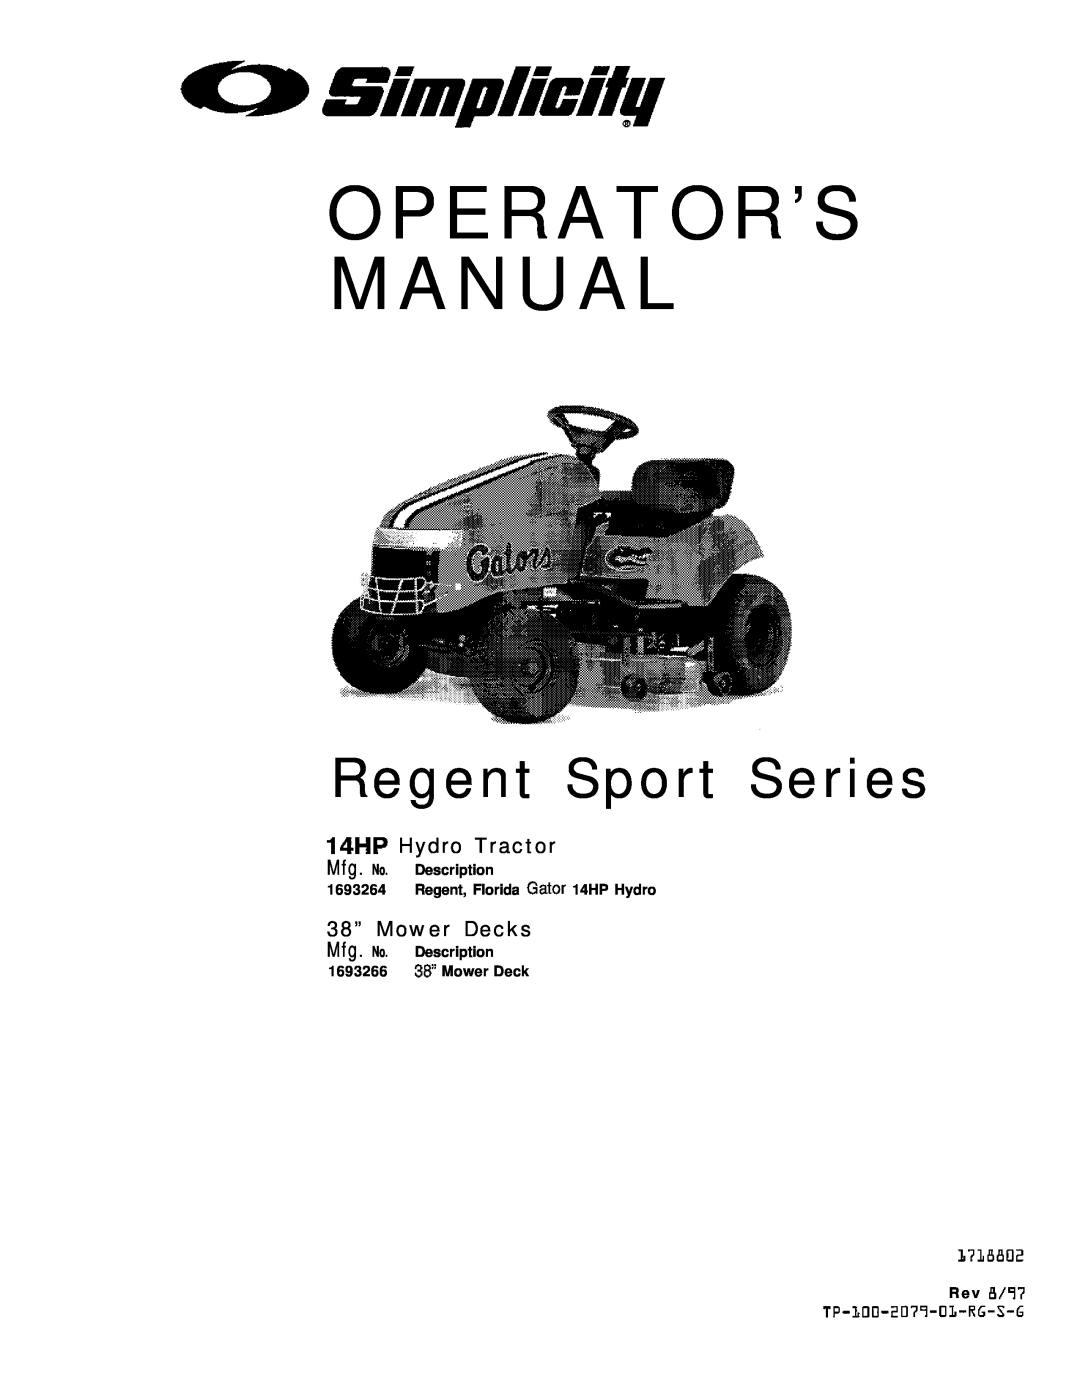 Simplicity 1693266, 1693264 manual Operator’S Manual, Regent Sport Series 